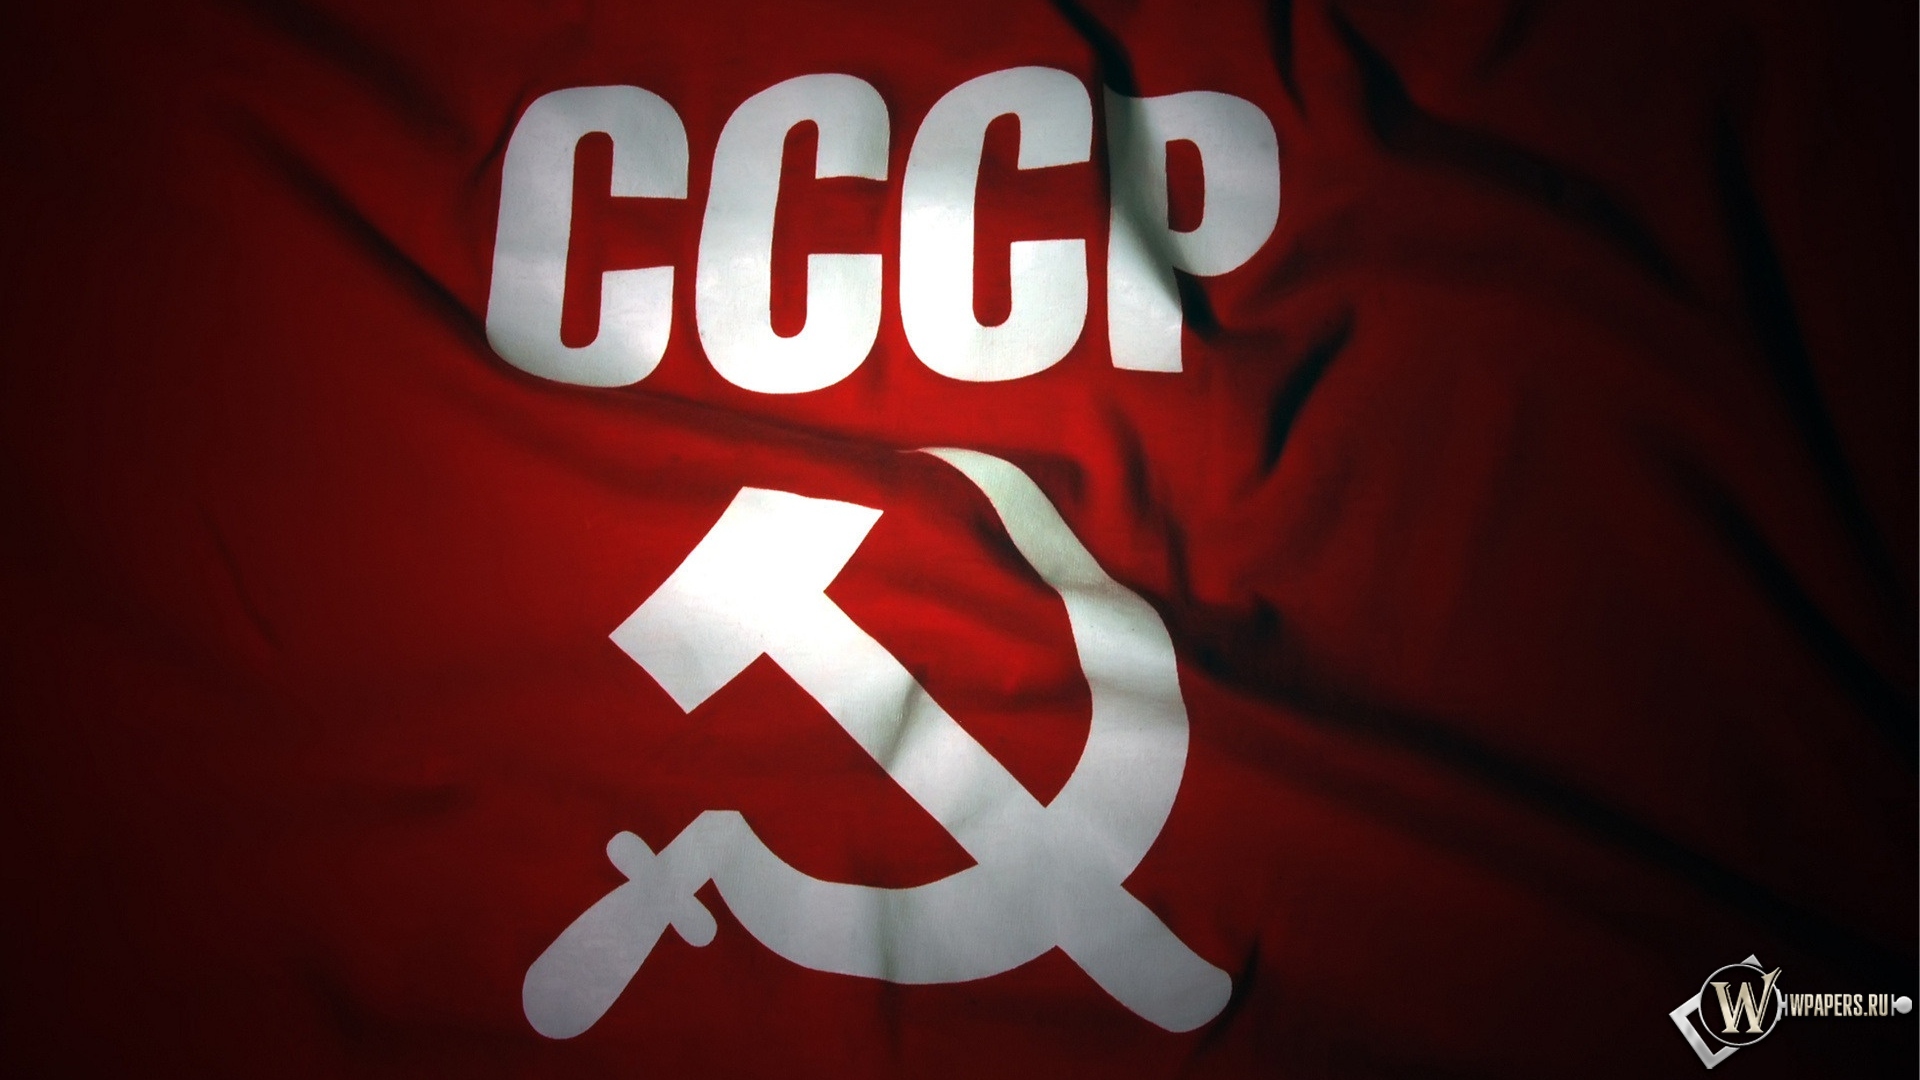 Флаг СССР 1920x1080